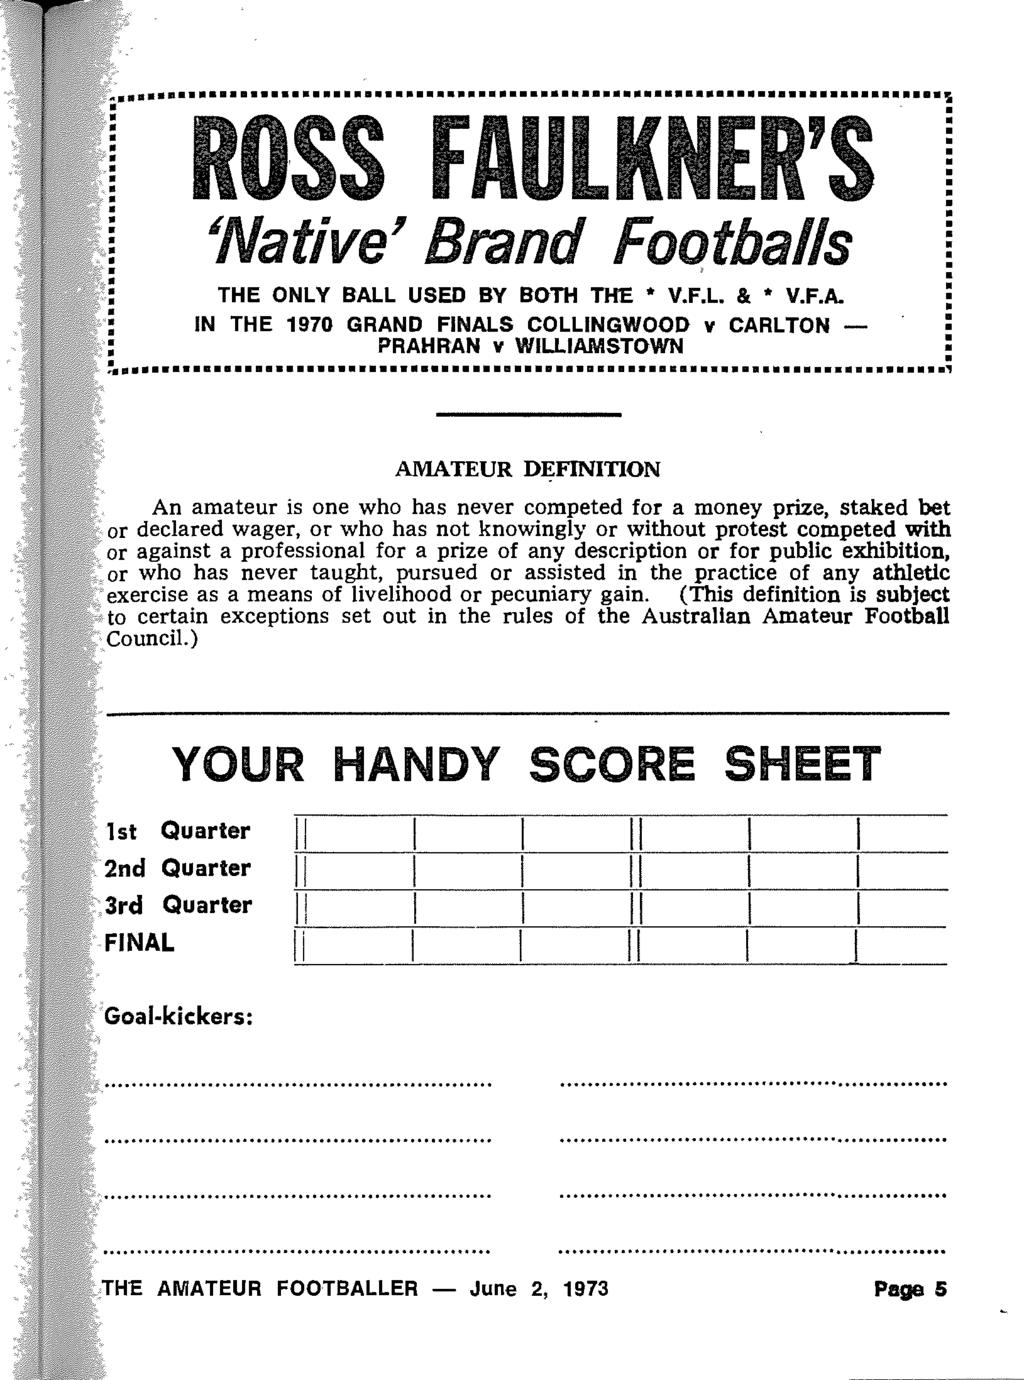 ; esvunu eeeneeveuv ev neeueuuuvuuueuuuvuevuvuo veuuaaucv S 'Native' Brand Footballs THE ONLY BALL USED BY BOTH THE * VFL & * VFA IN THE 1970 GRAND FINALS COLLINGWOOD v CARLTON - PRAHRAN v